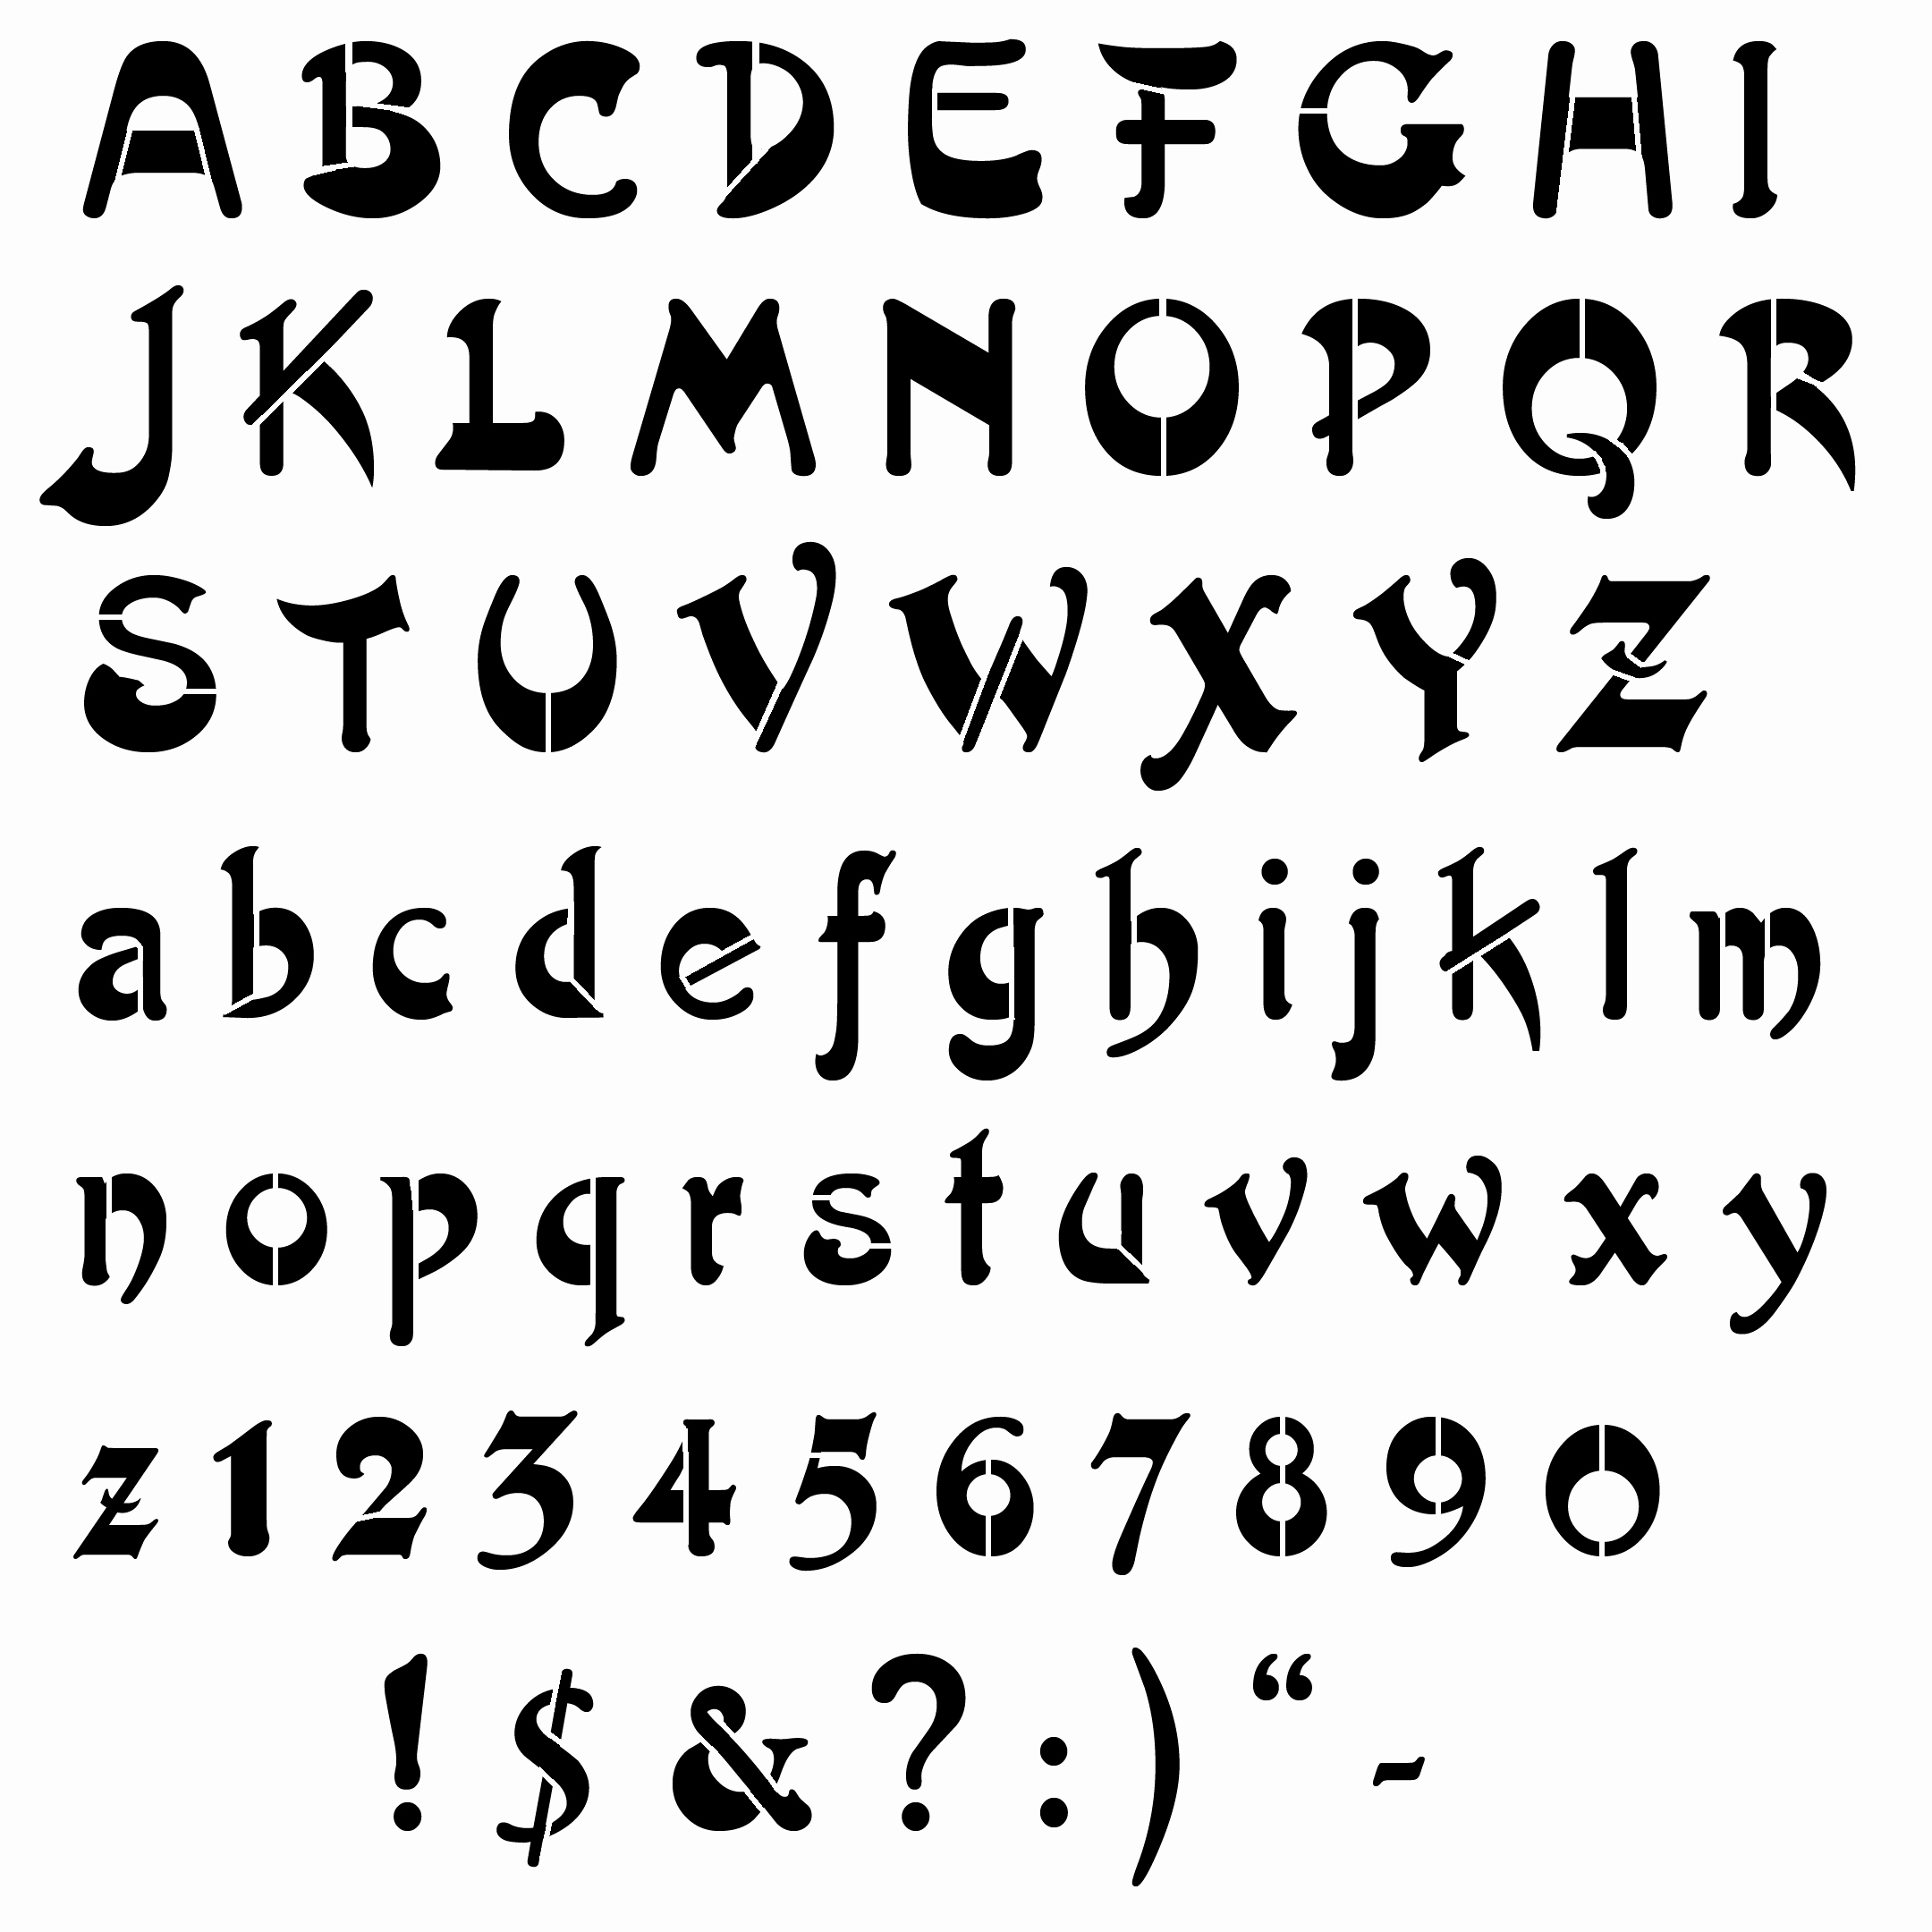 Cut Out Alphabet Letters Lovely Free Cut Out Alphabet Stencils